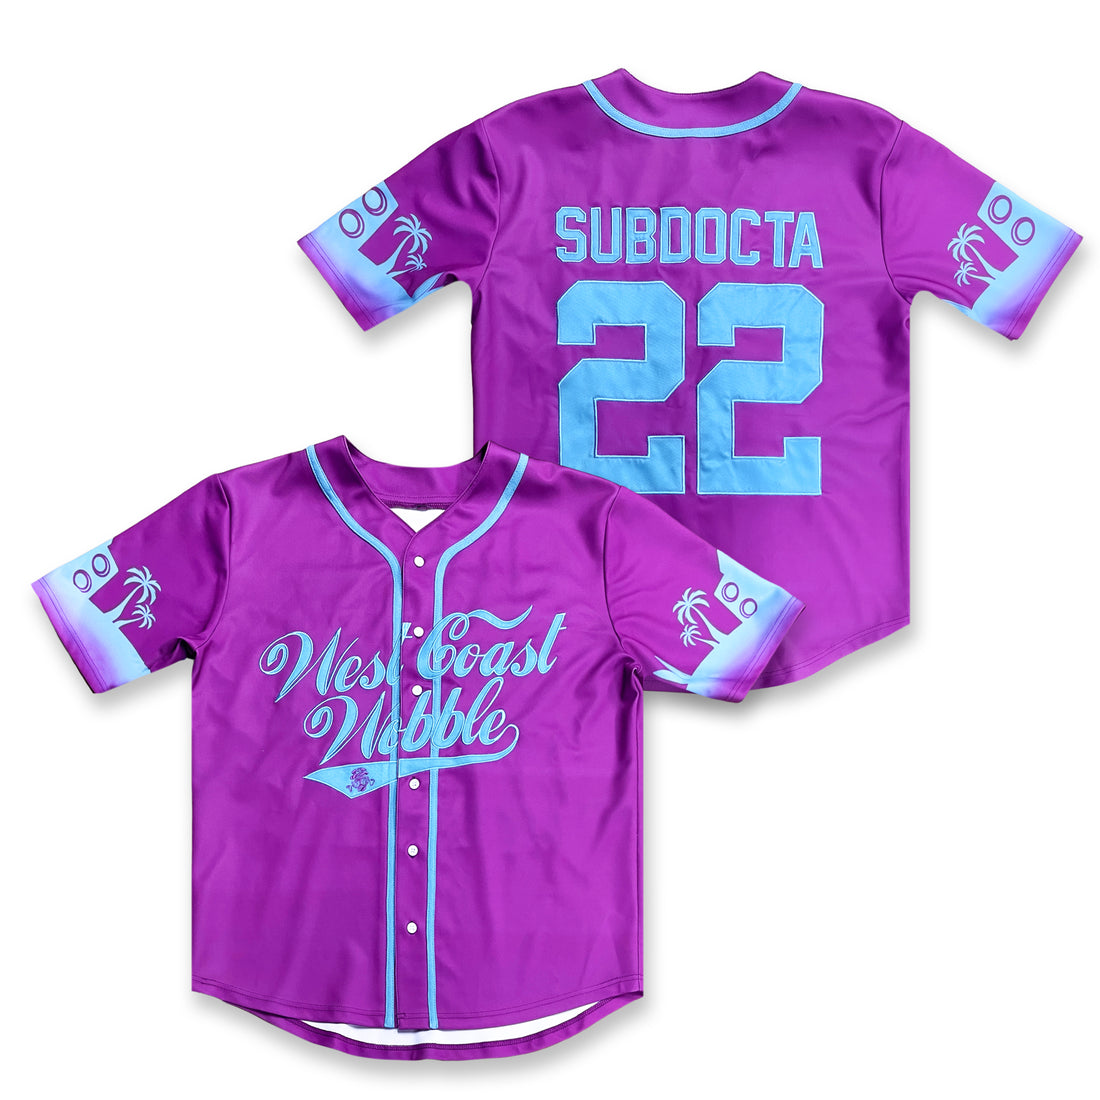 SubDocta - WCW - Premium Baseball Jersey